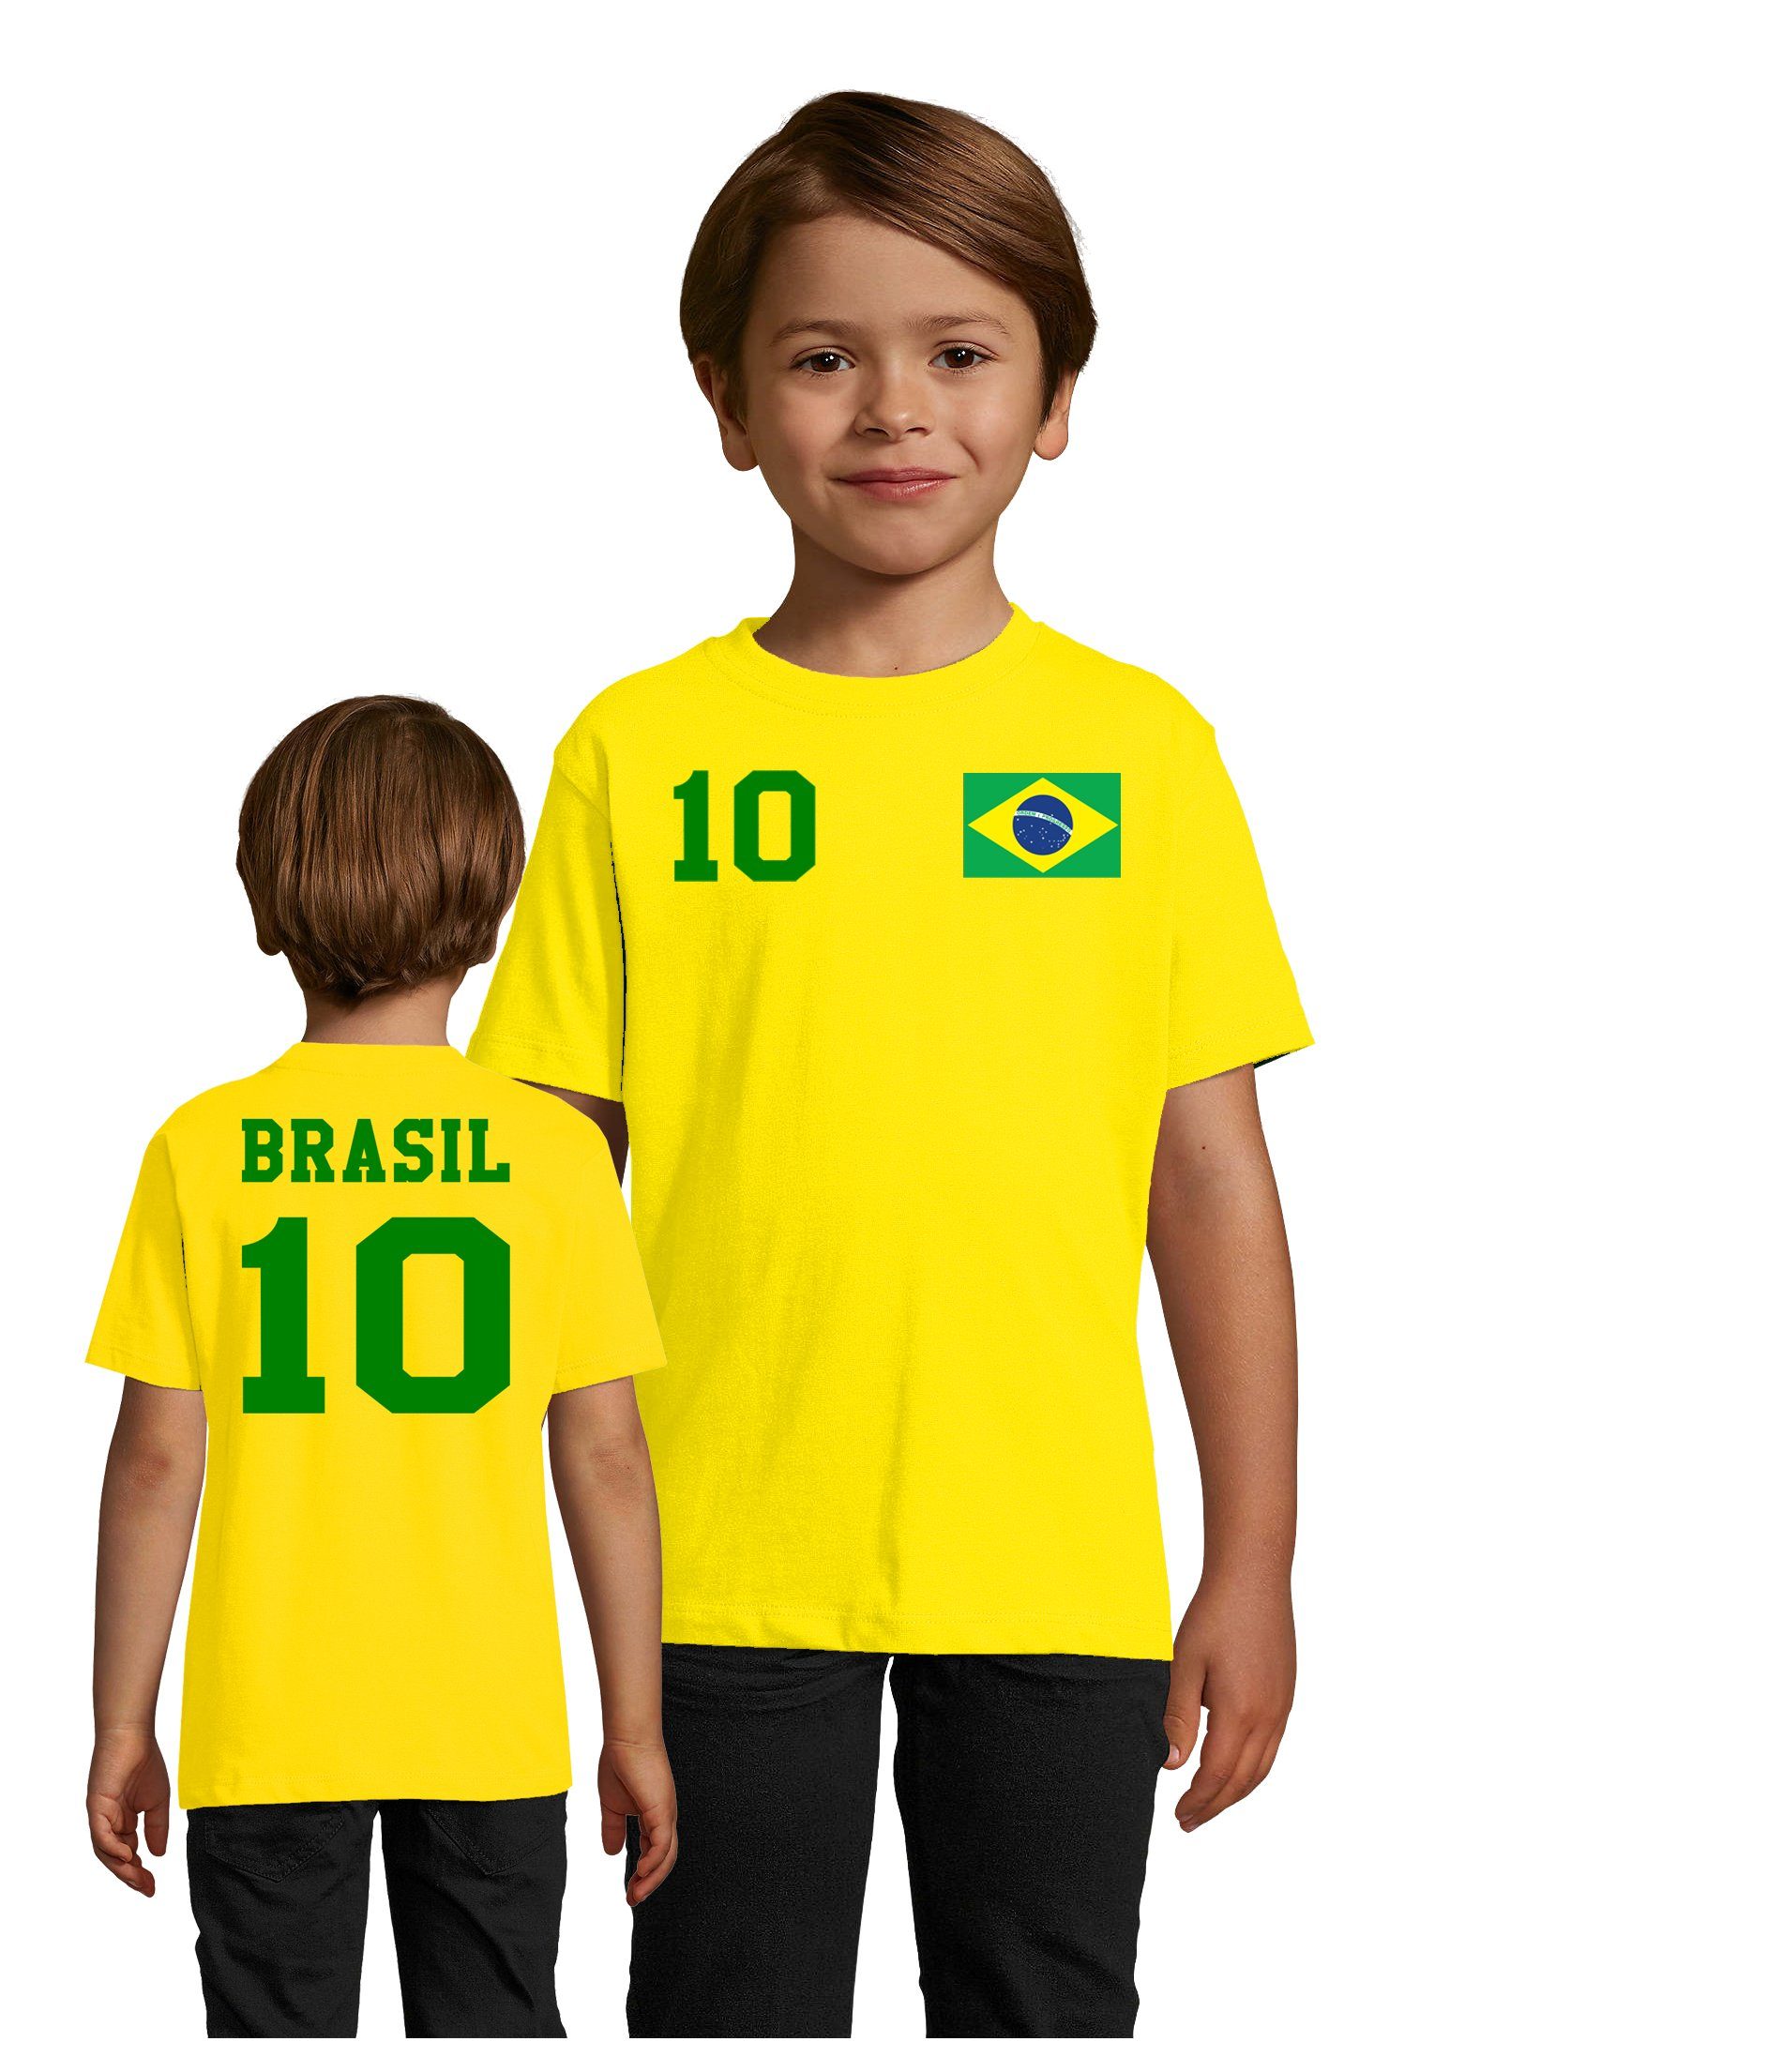 Blondie & Brownie T-Shirt Kinder Brasilien Sport Shirt Trikot Fussball Meister Copa